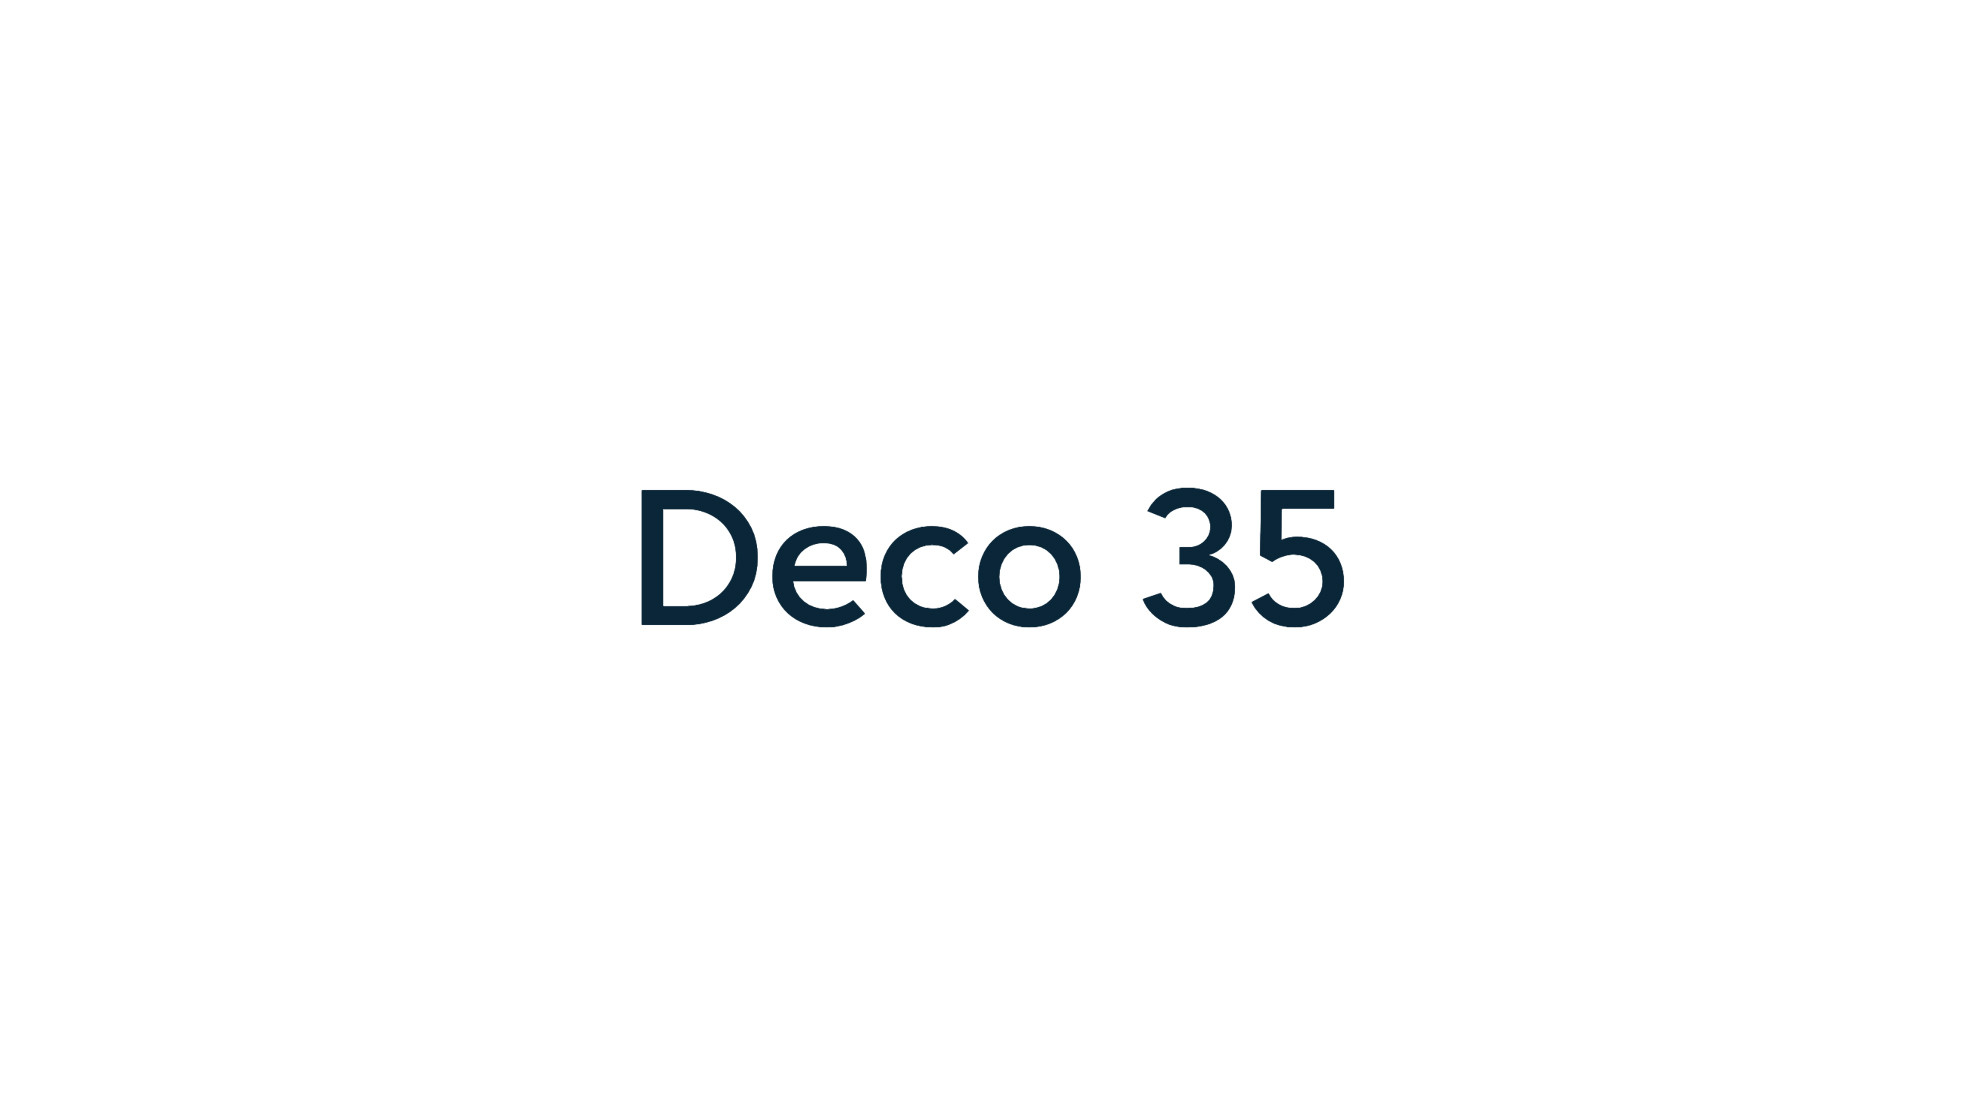 Bellway's Deco 35 development logo cover